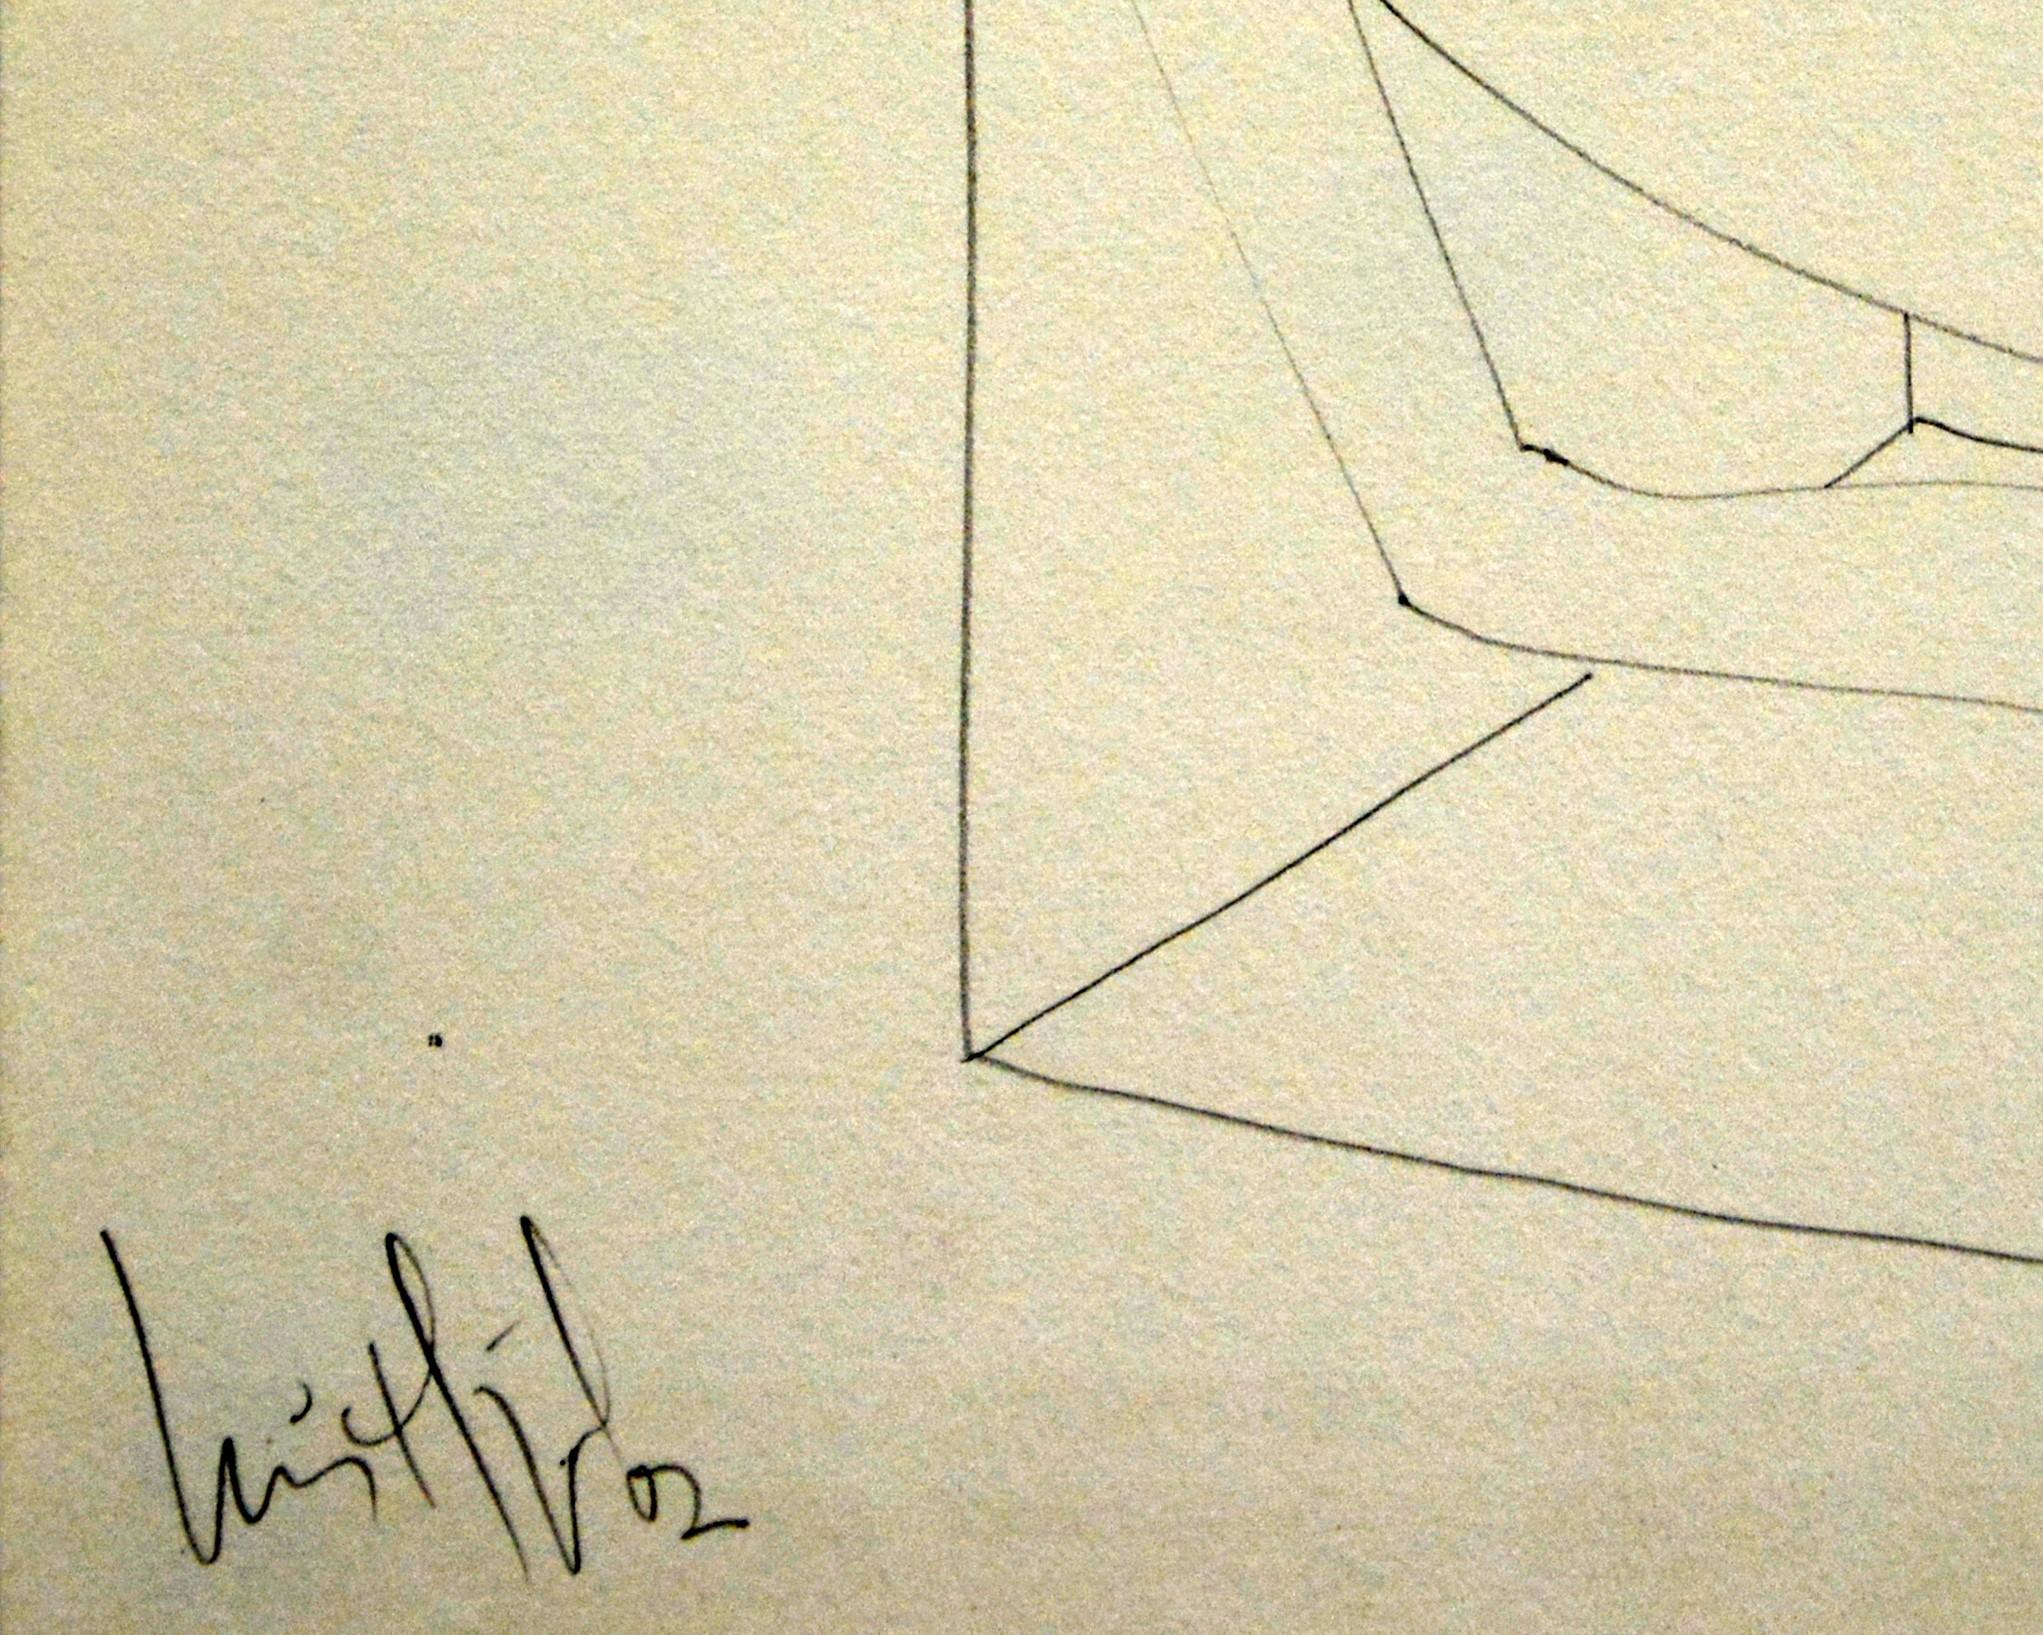 Luis Miguel Valdes, ¨A pura linea¨, 2002, Work on paper, 9.8x11 in - Art by Luis Miguel Valdes 